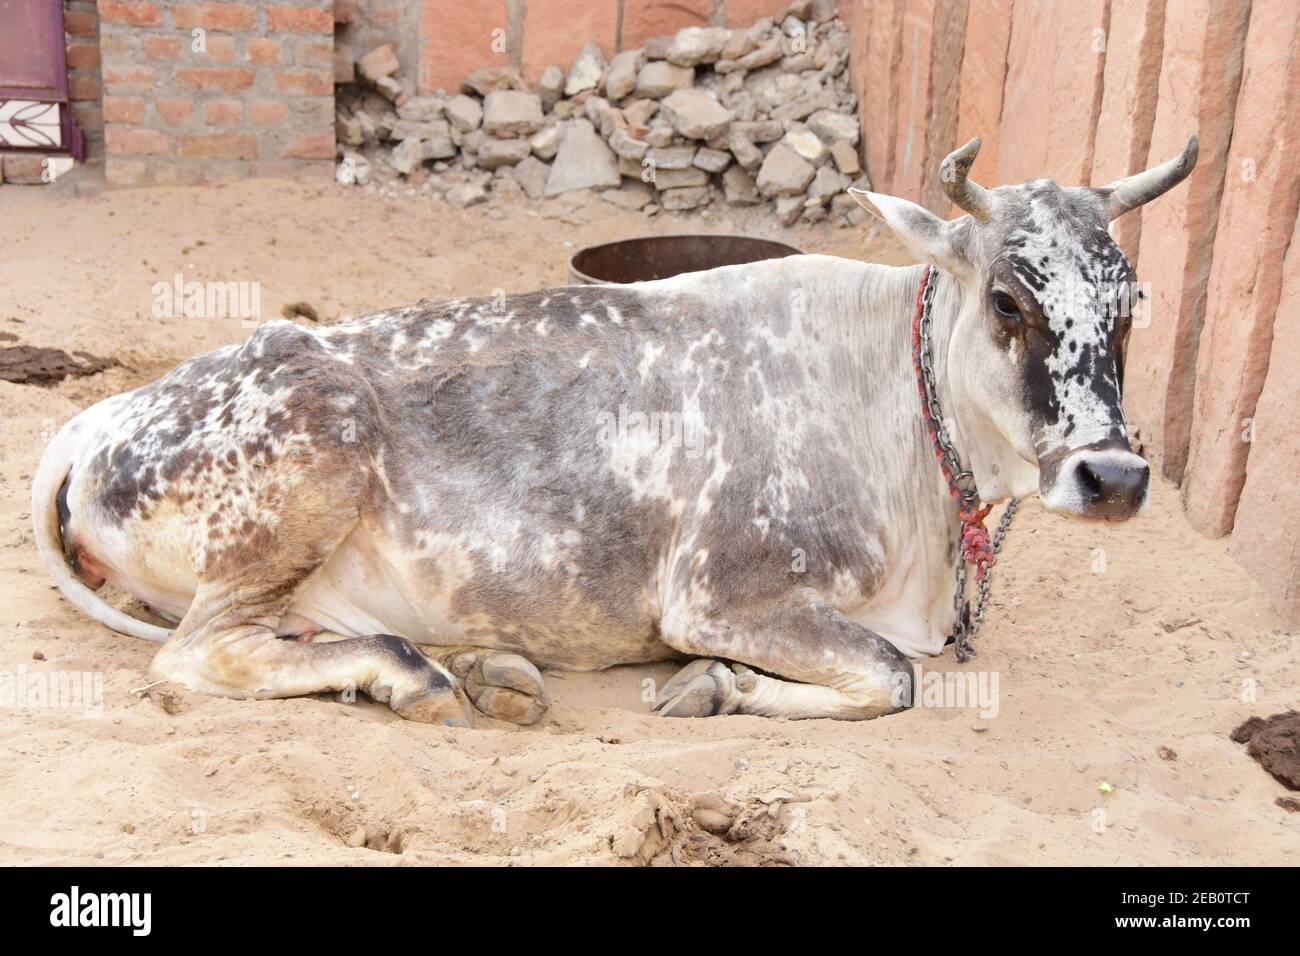 Indian cow zebu lying on sand in the barn Stock Photo - Alamy